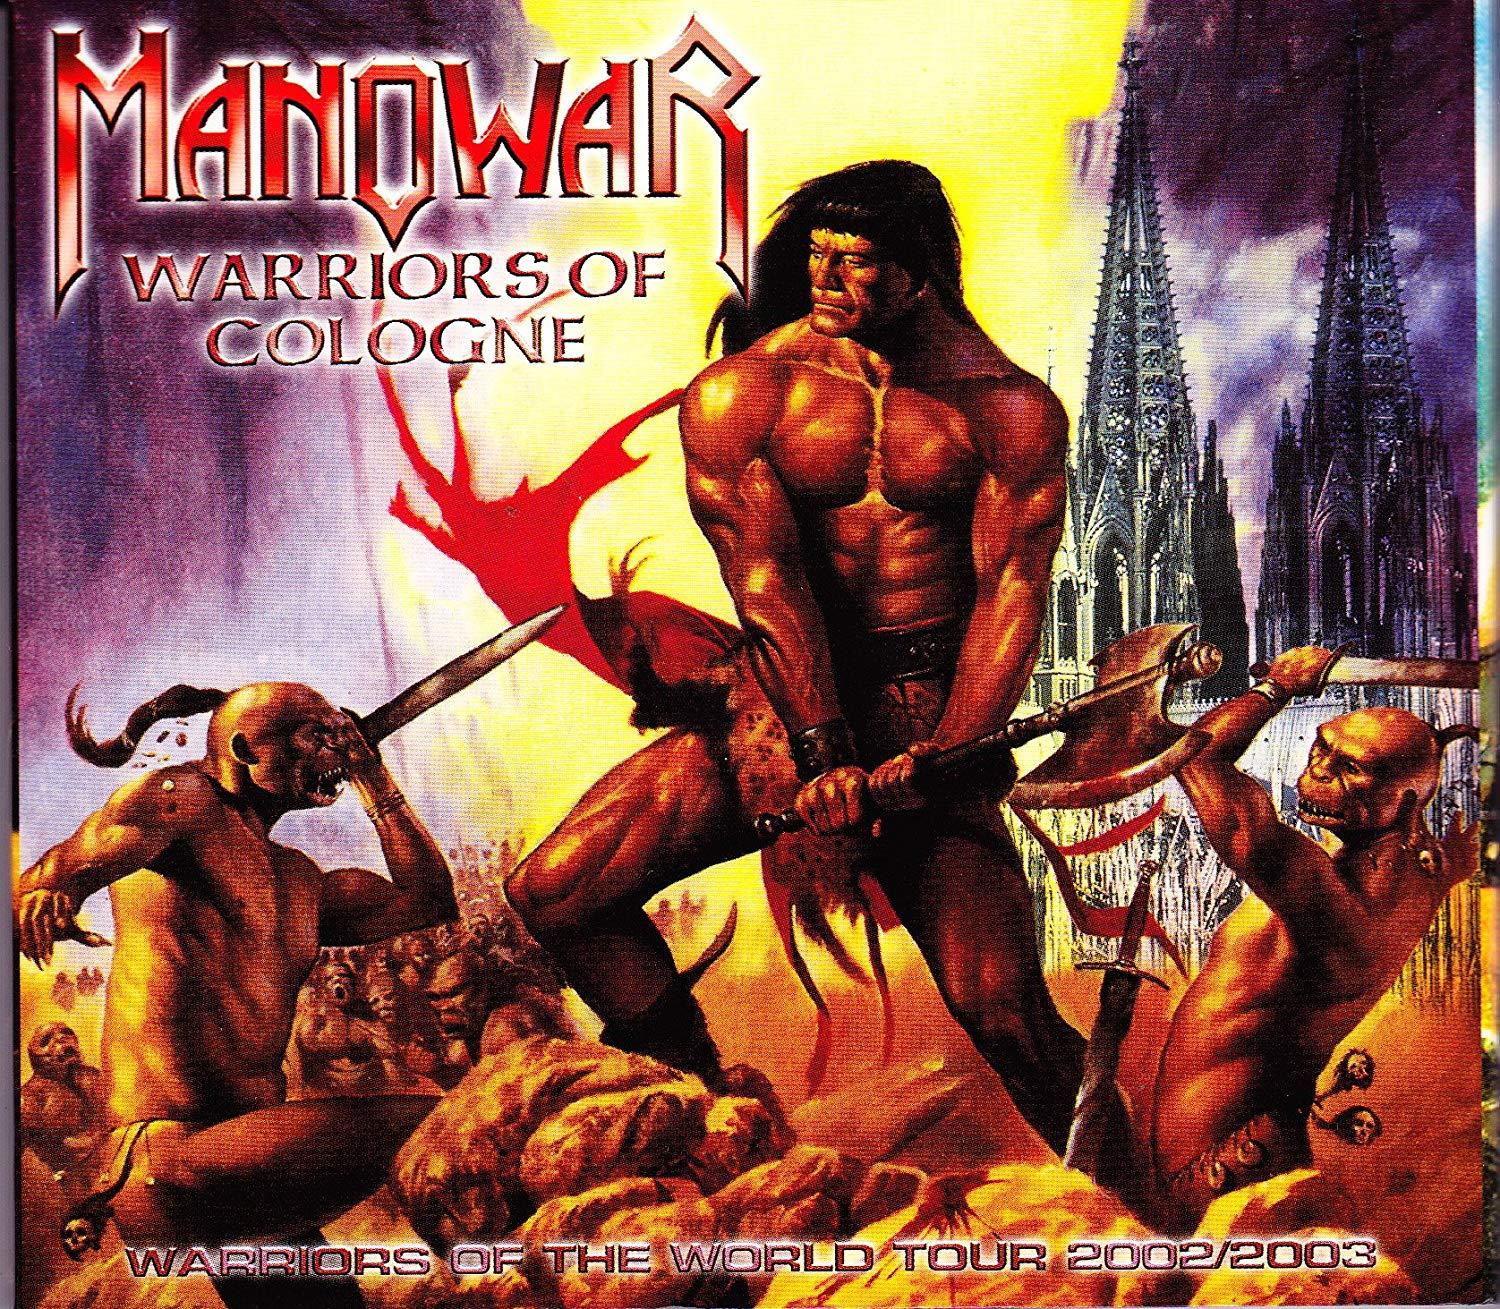 manowar warriors of the world song release date